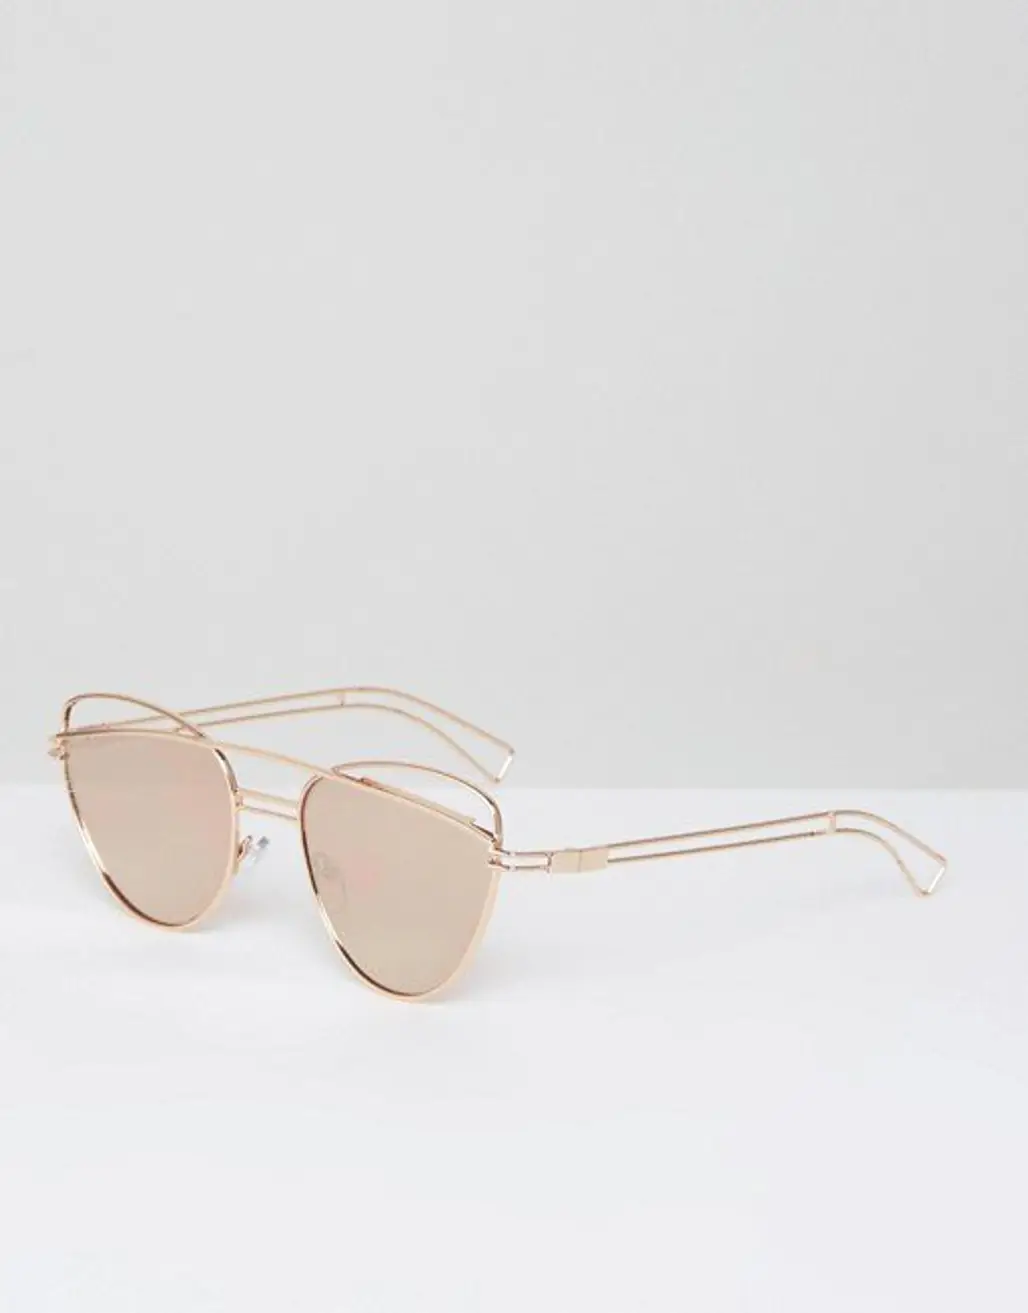 eyewear, sunglasses, glasses, vision care, fashion accessory,